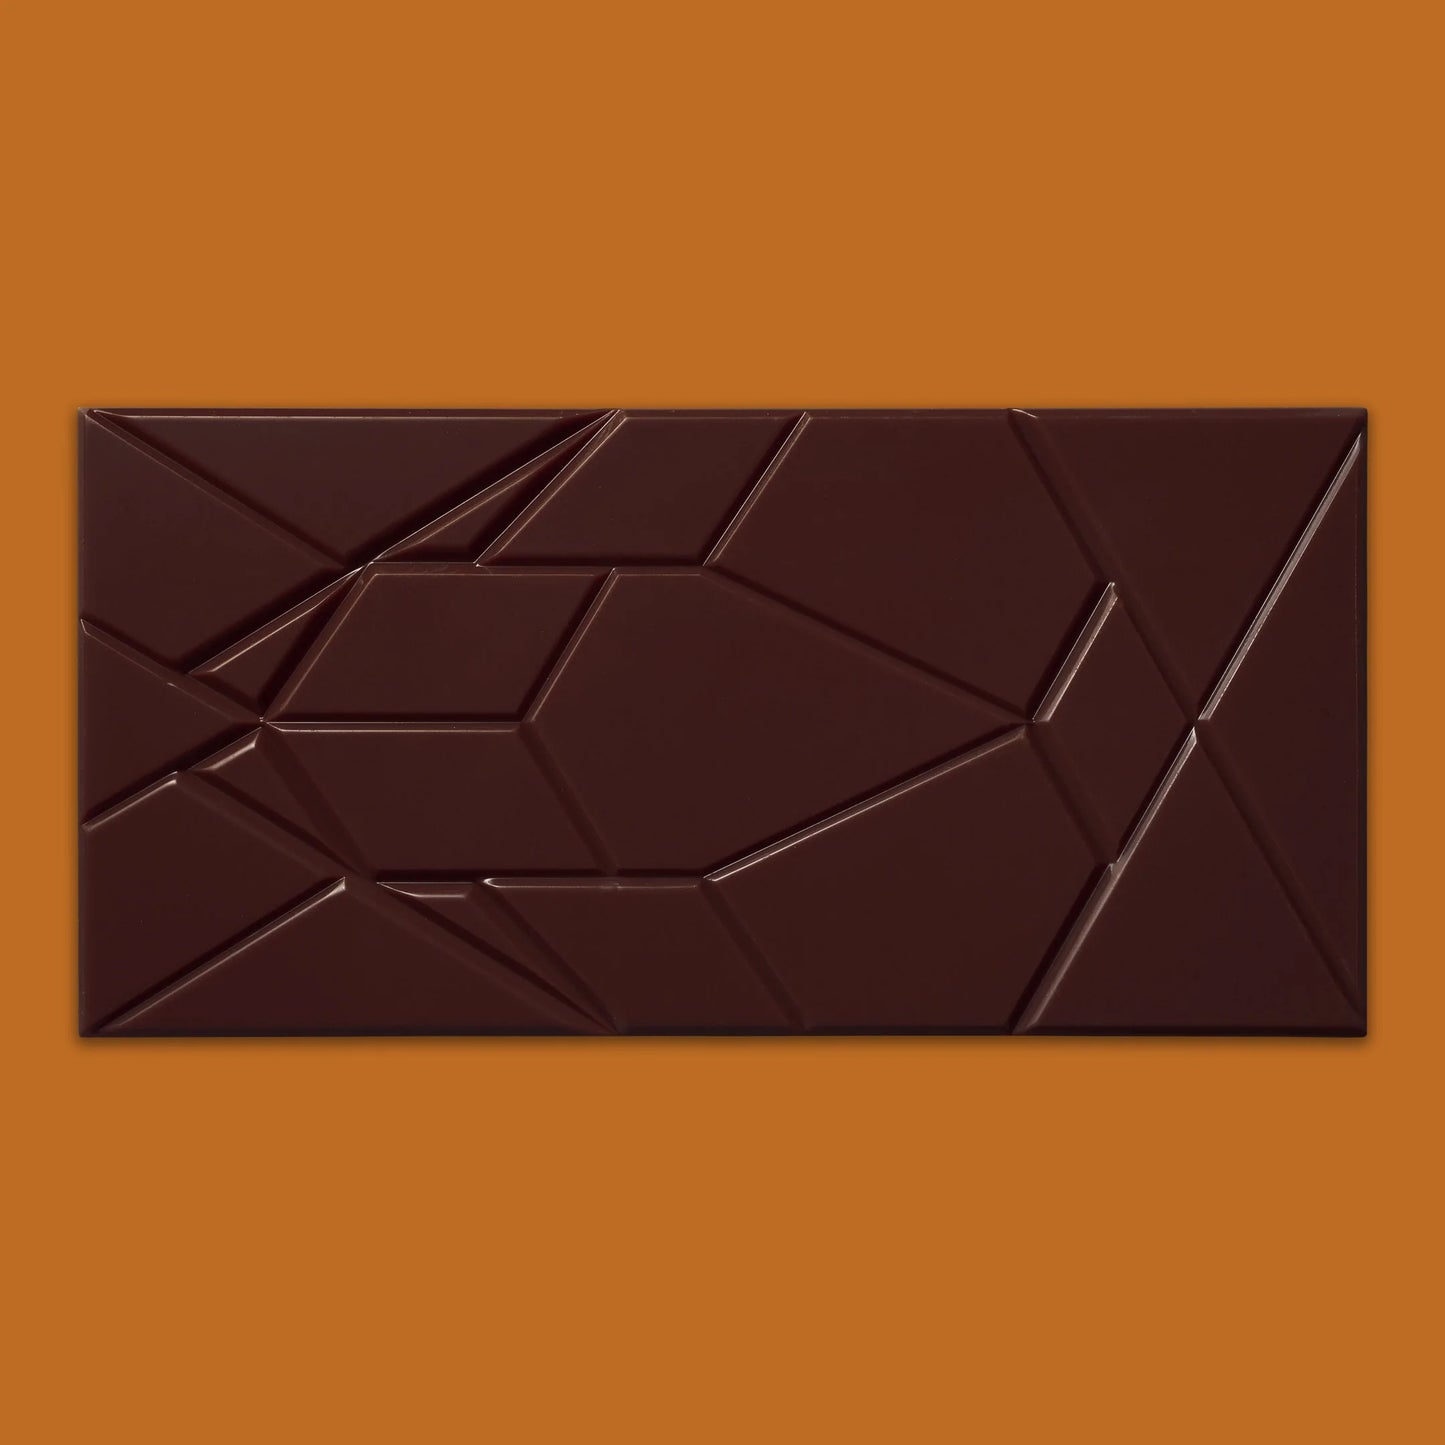 Tanzania 70% Chocolate Bar by OMNOM